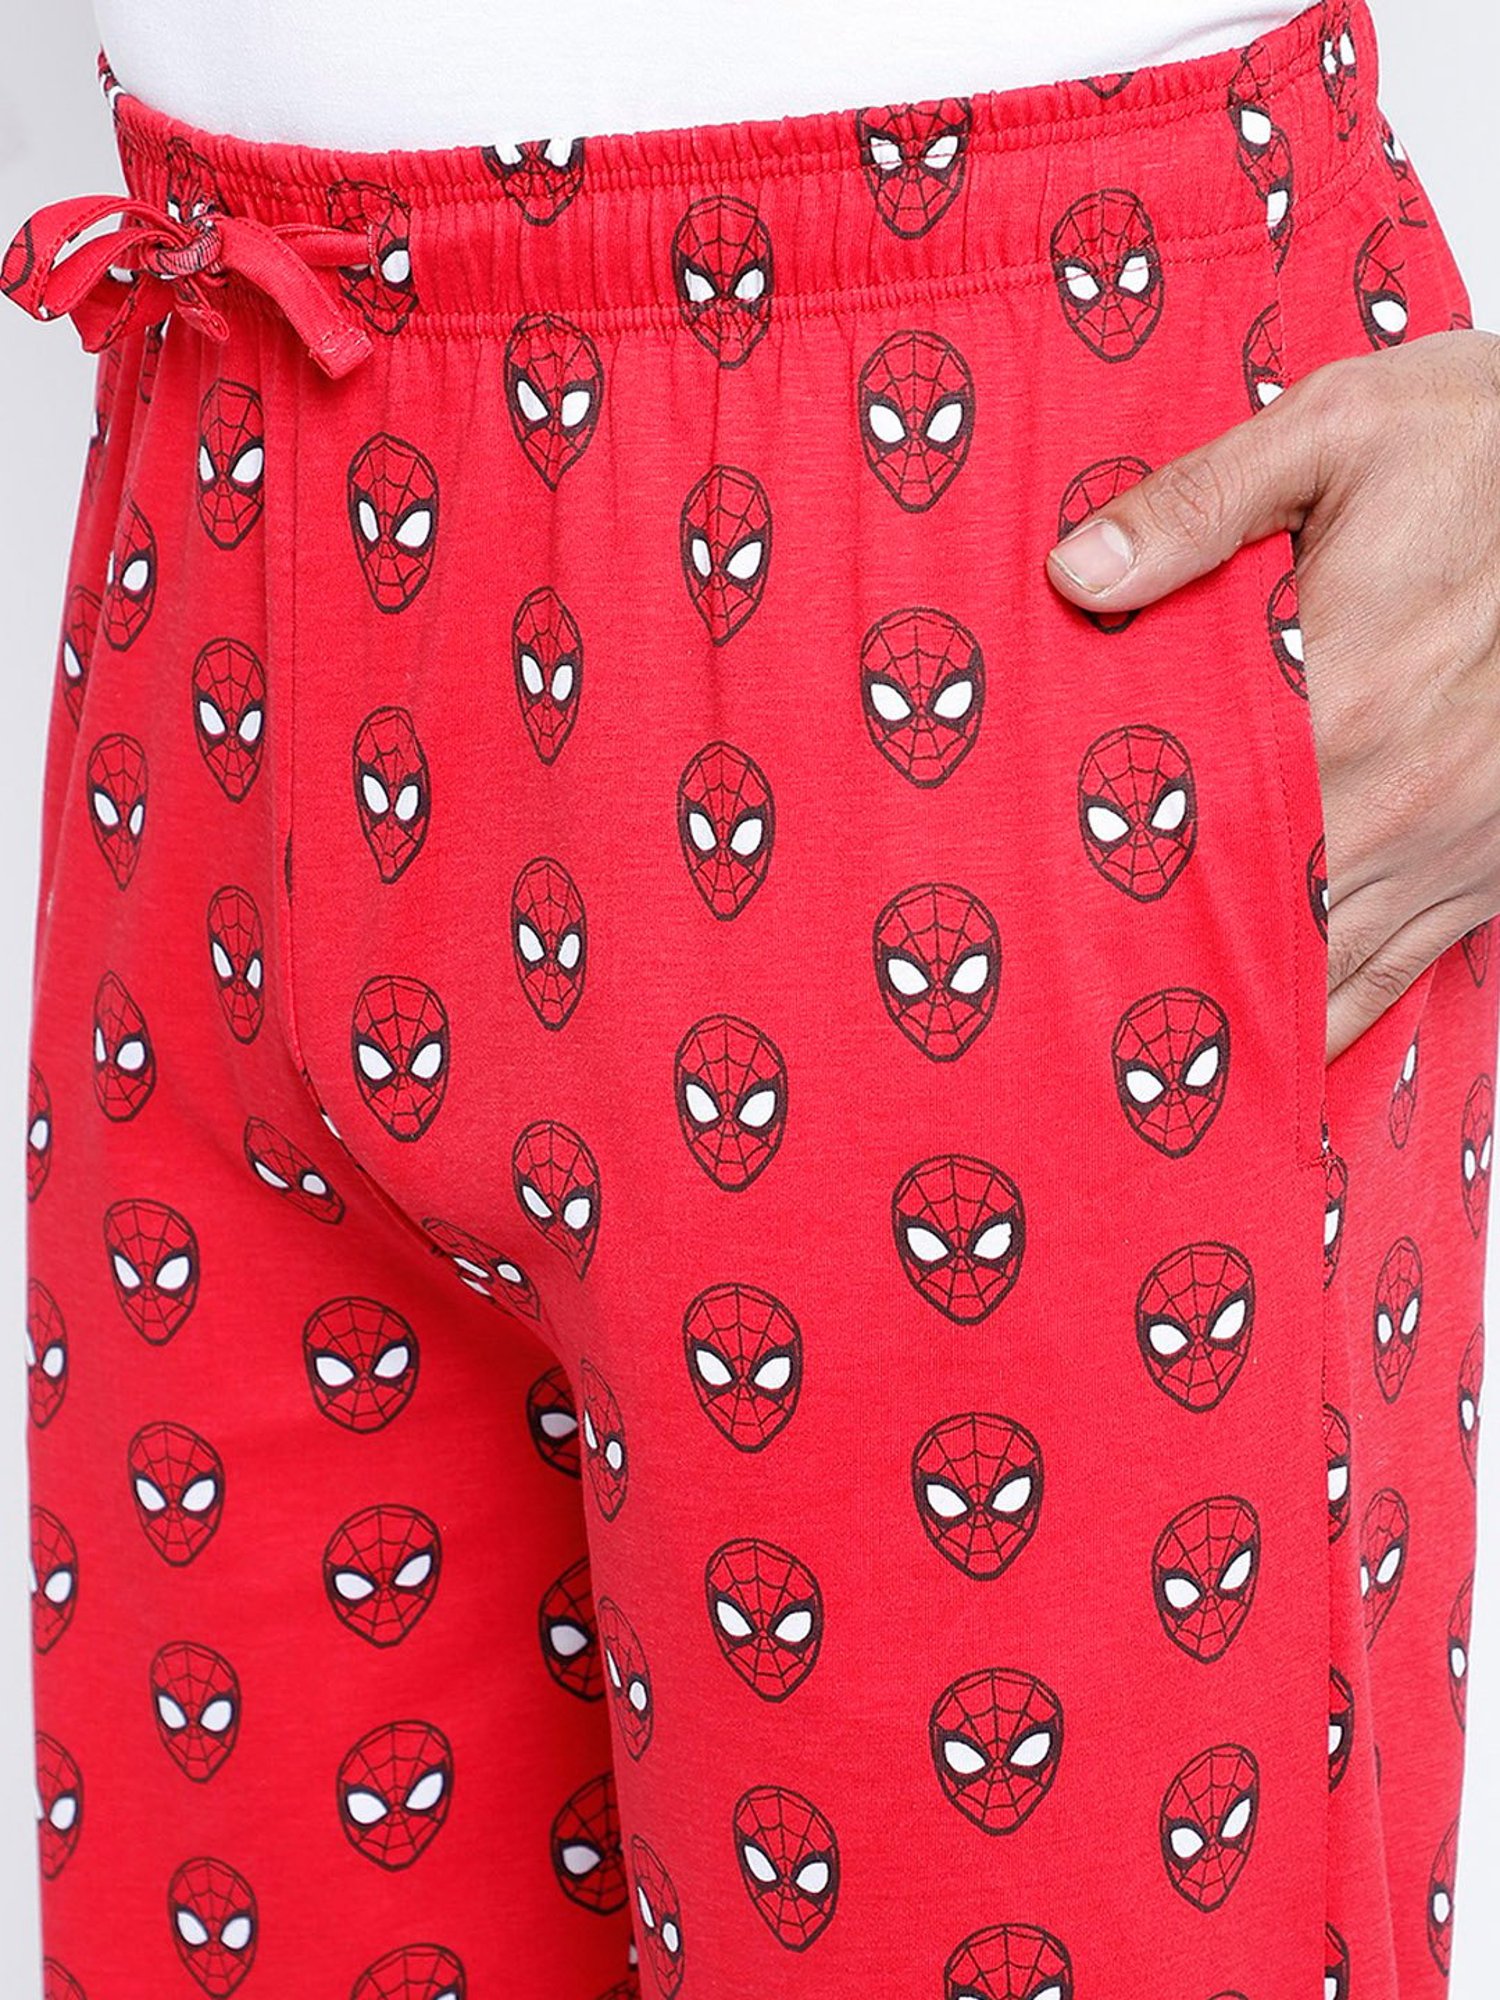 VENOM MARVEL Spiderman Mens Pajama Pants Sleep Lounge Size S  2XL Movie  NEW NWT  eBay